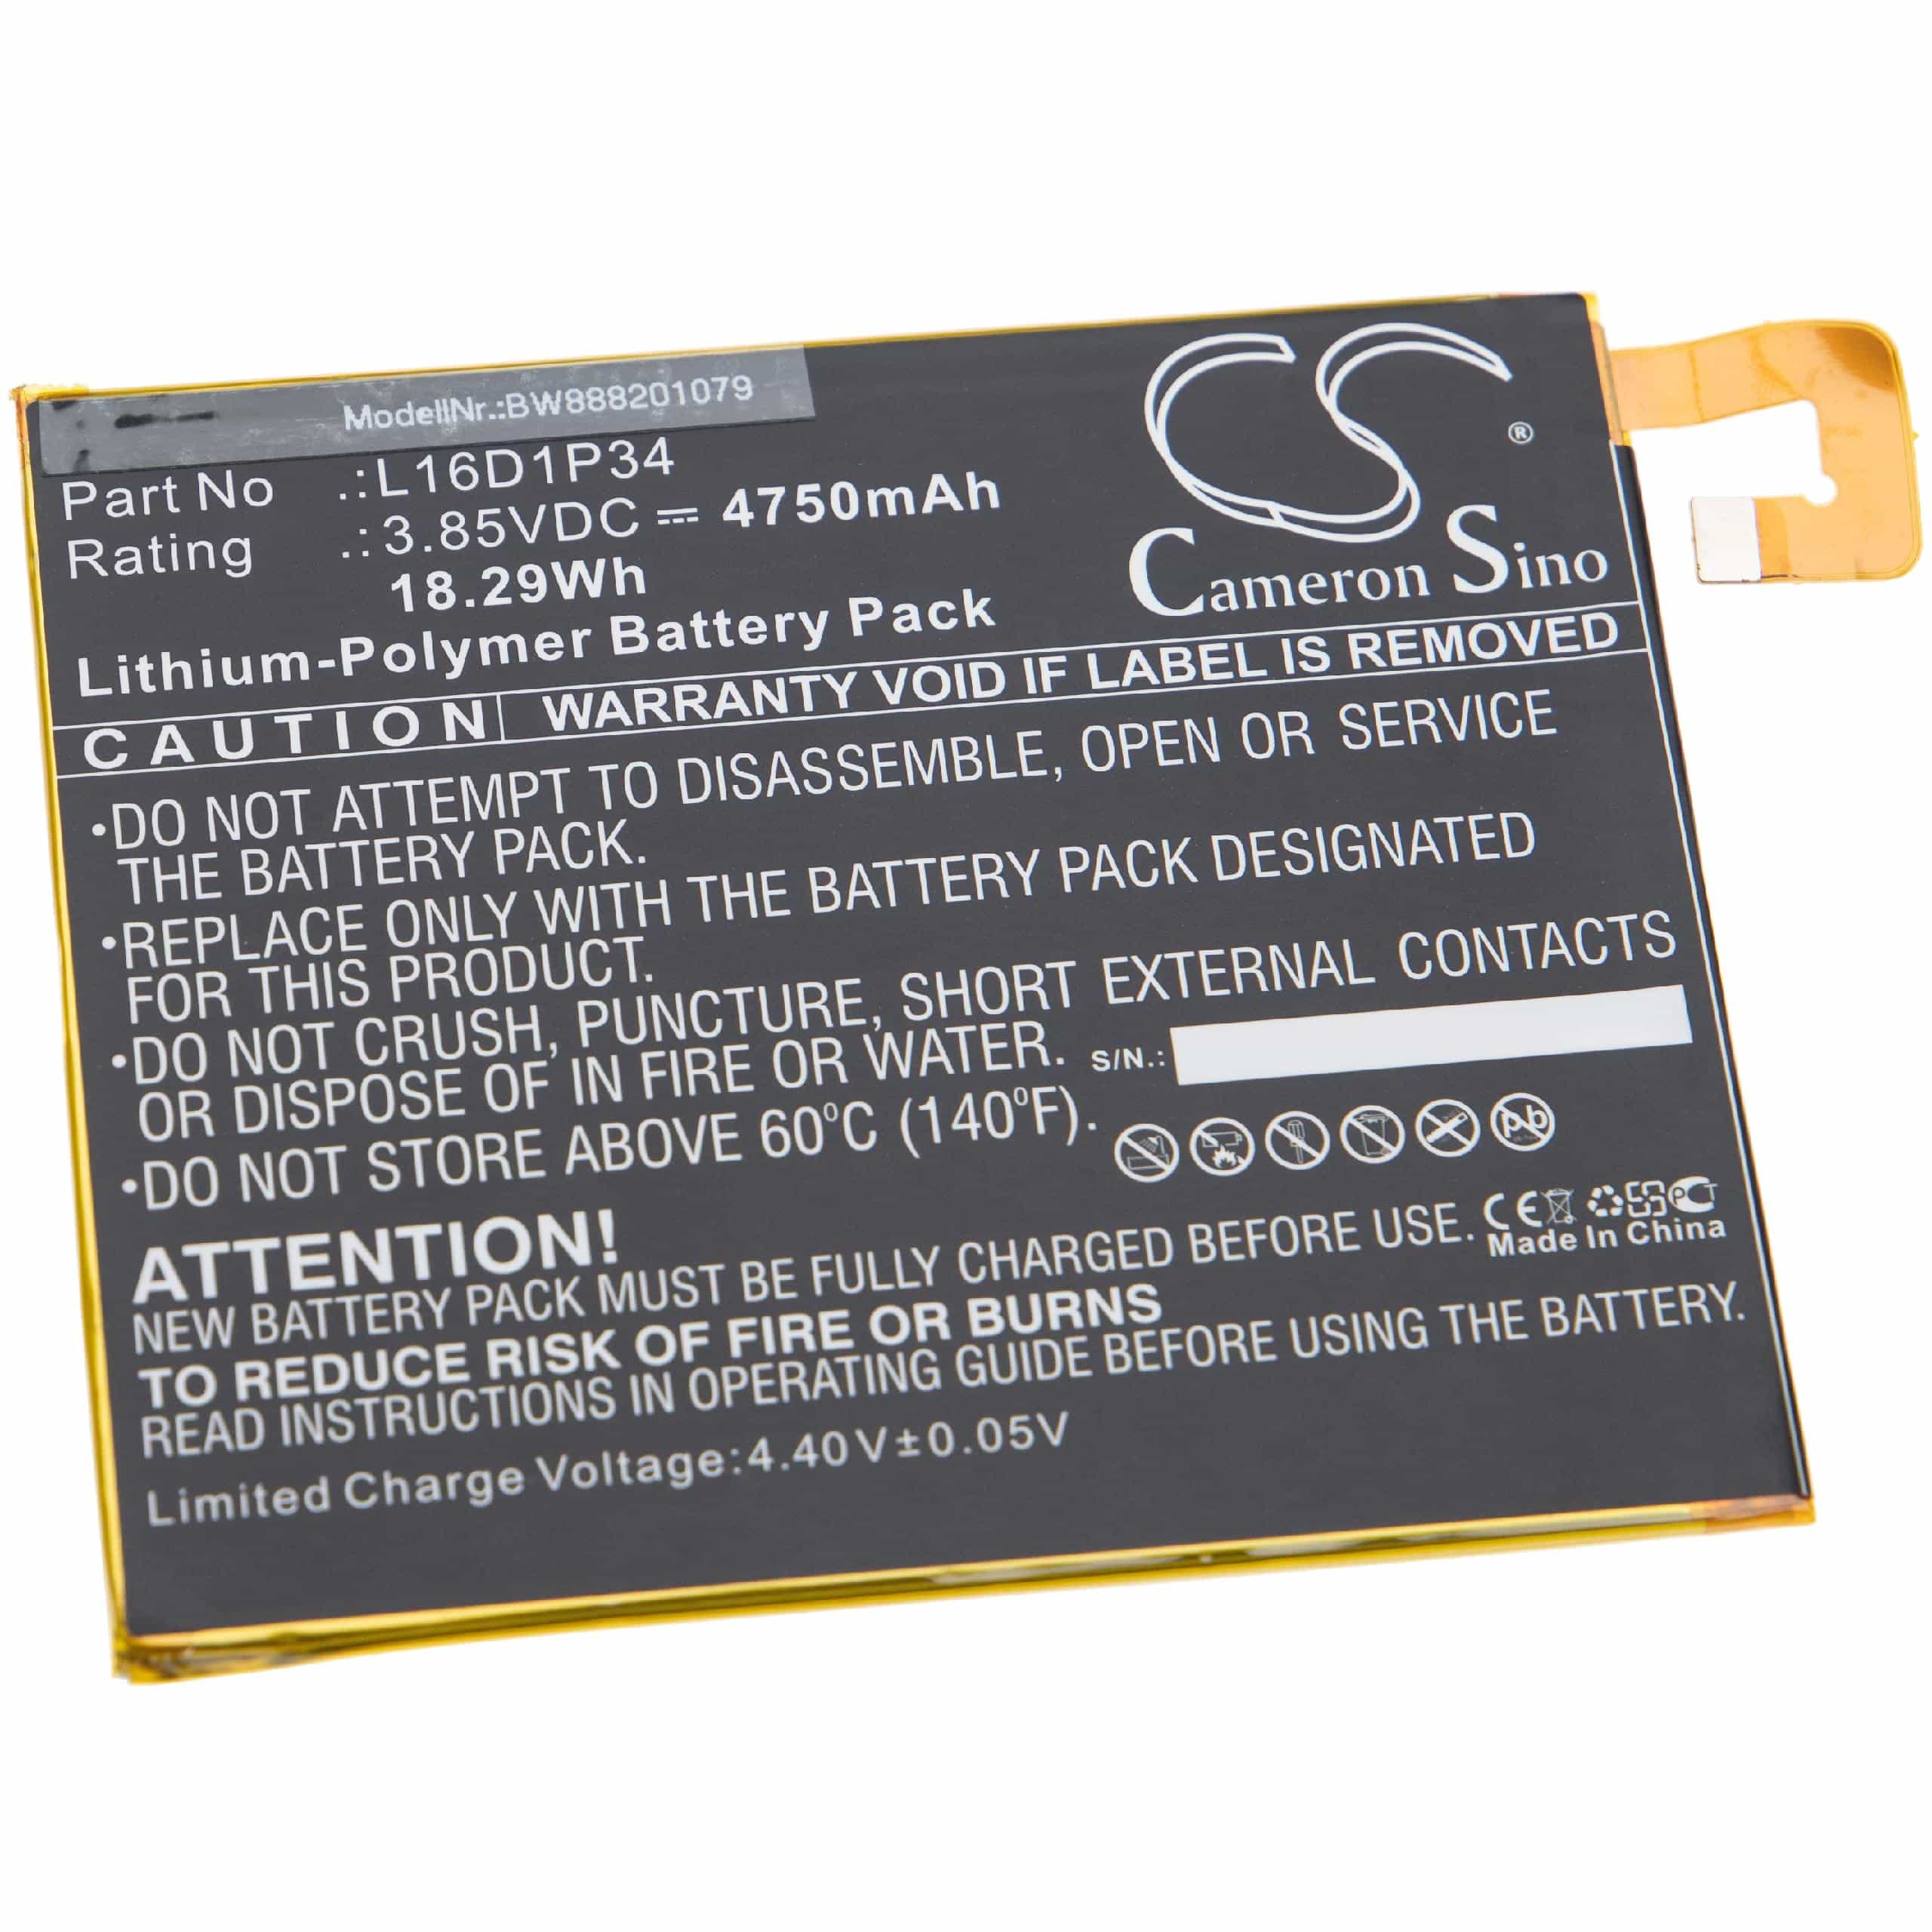 Akumulator zamiennik Lenovo L16D1P34 - 4750 mAh 3,85 V LiPo